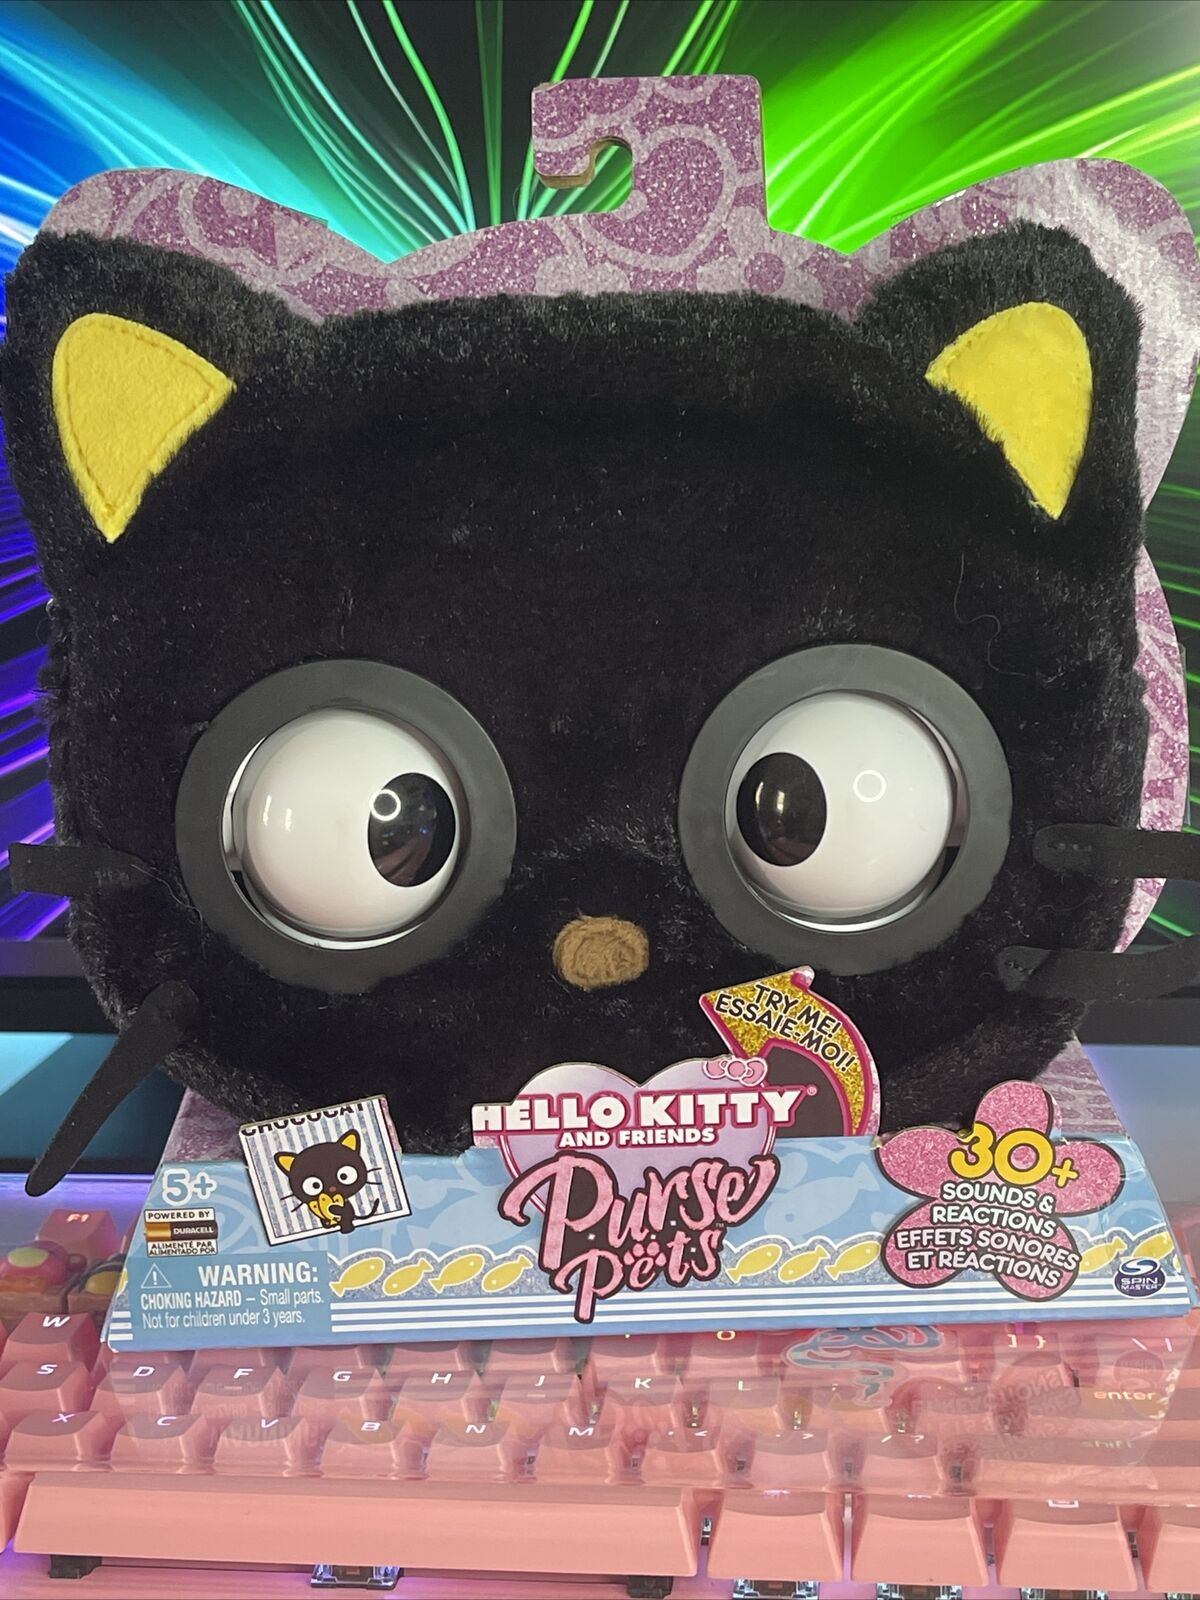 New Sanrio Chococat Purse Pets Friend Interactive Toy Black Cat Hello Kitty